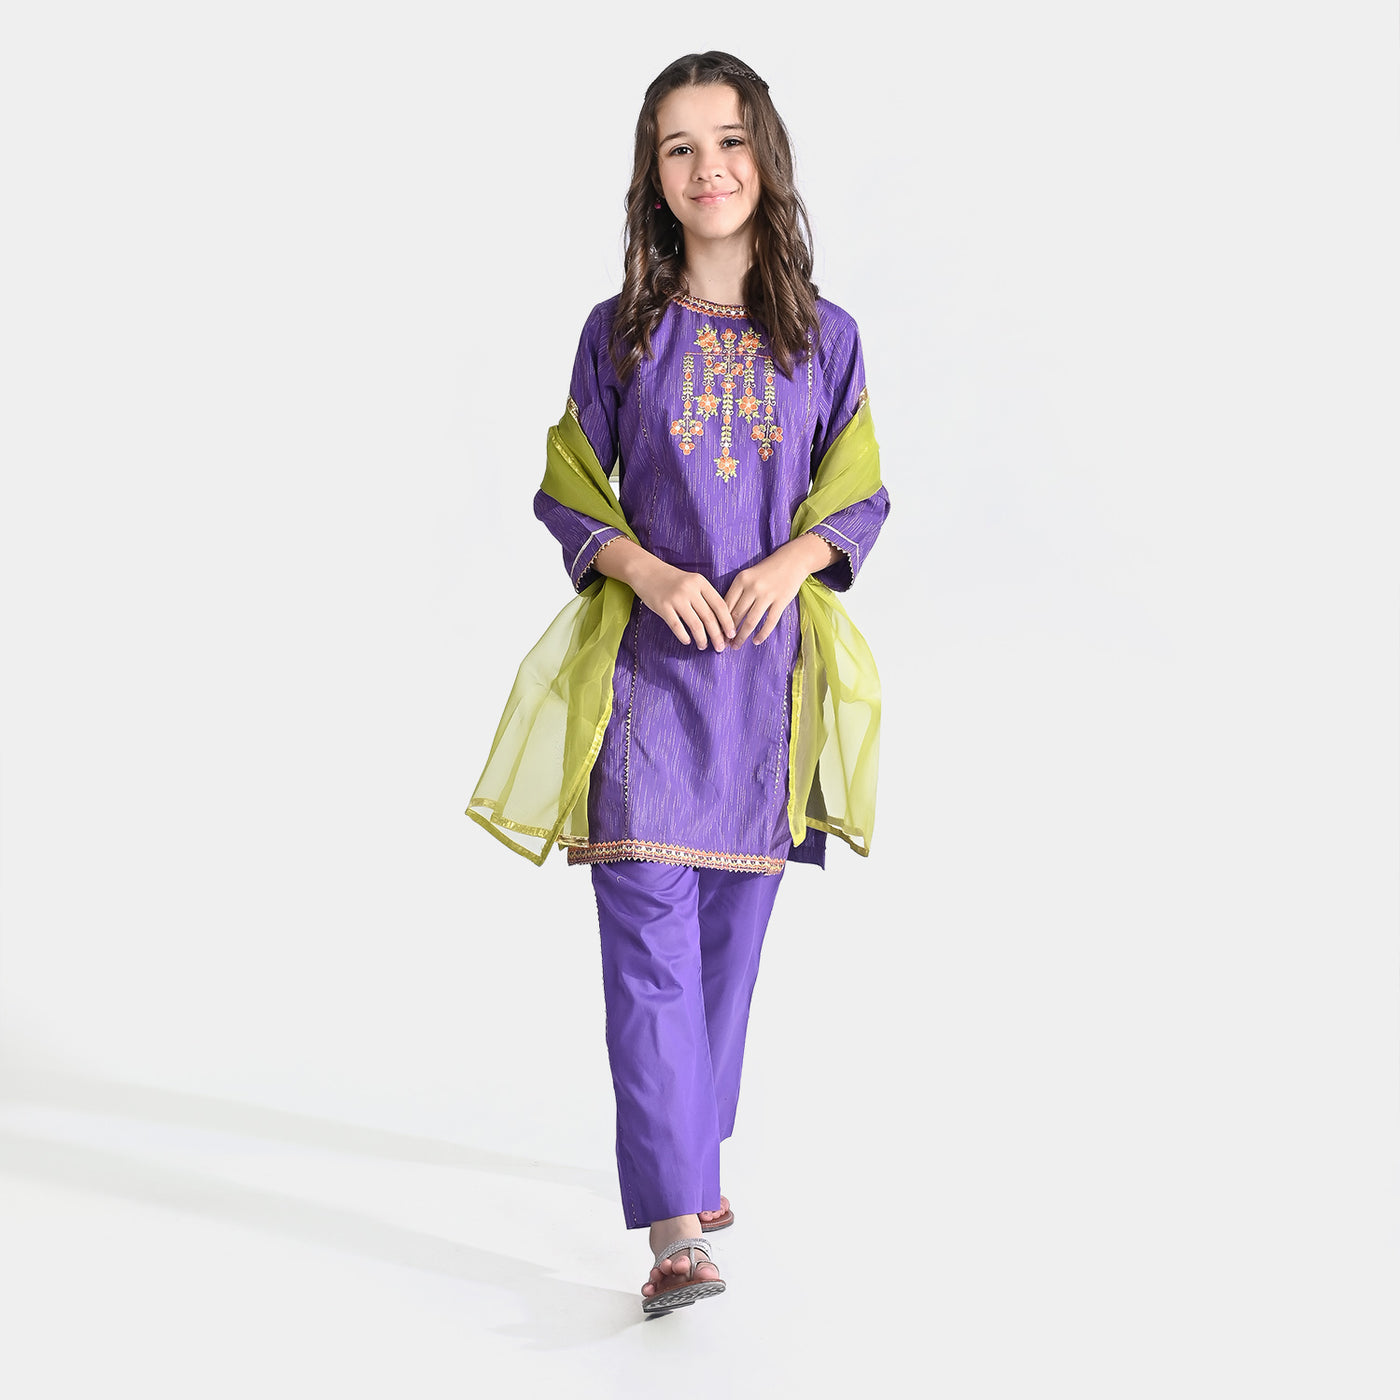 Girls Jacquard 3PC Suit Sada Bahar-Purple